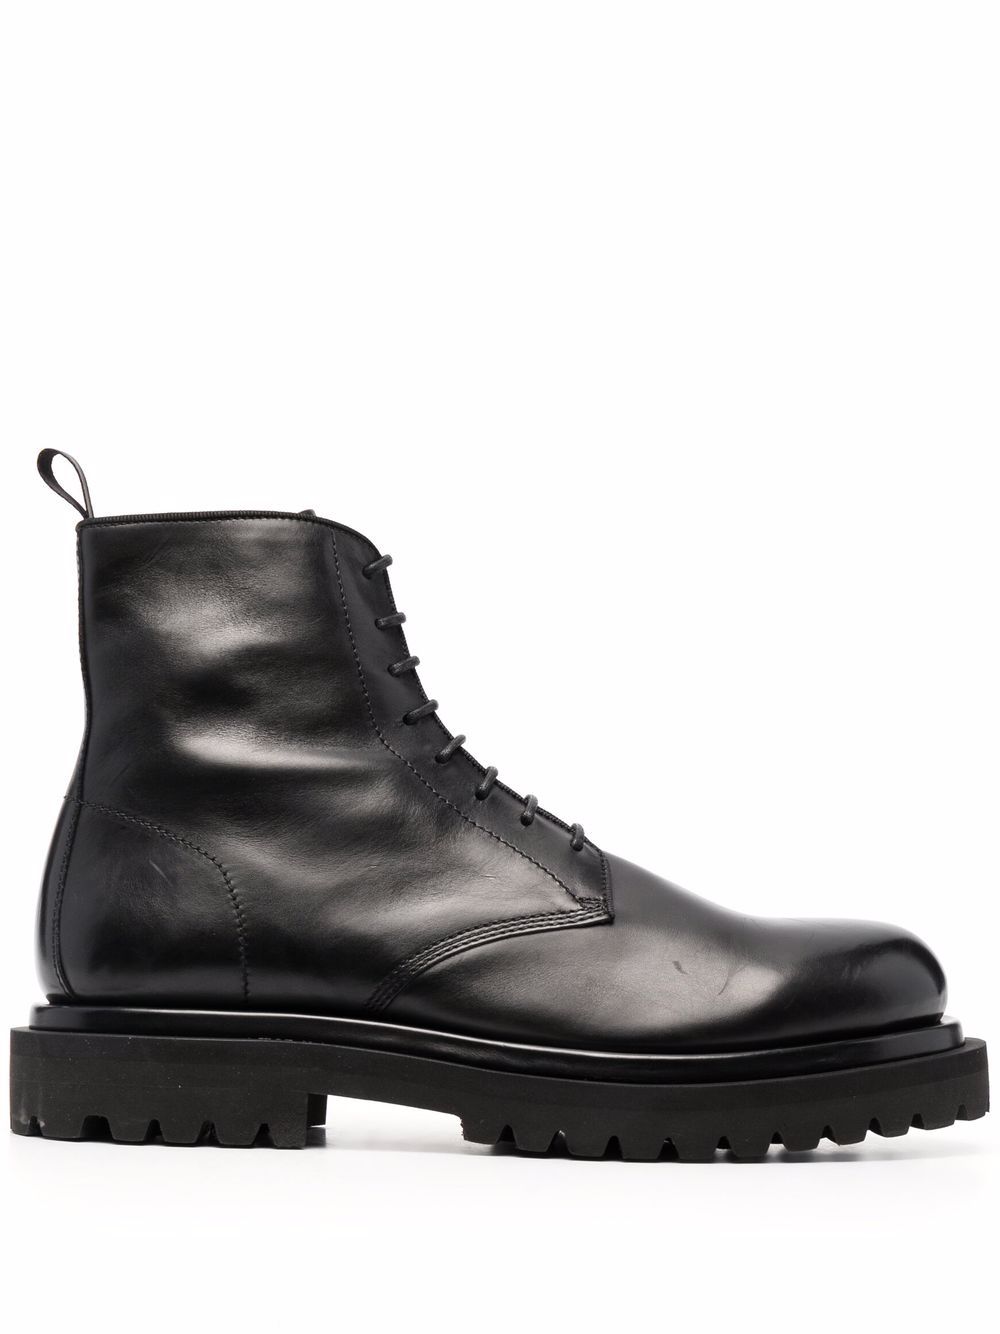 Officine Creative eventual polished leather boots - Black von Officine Creative